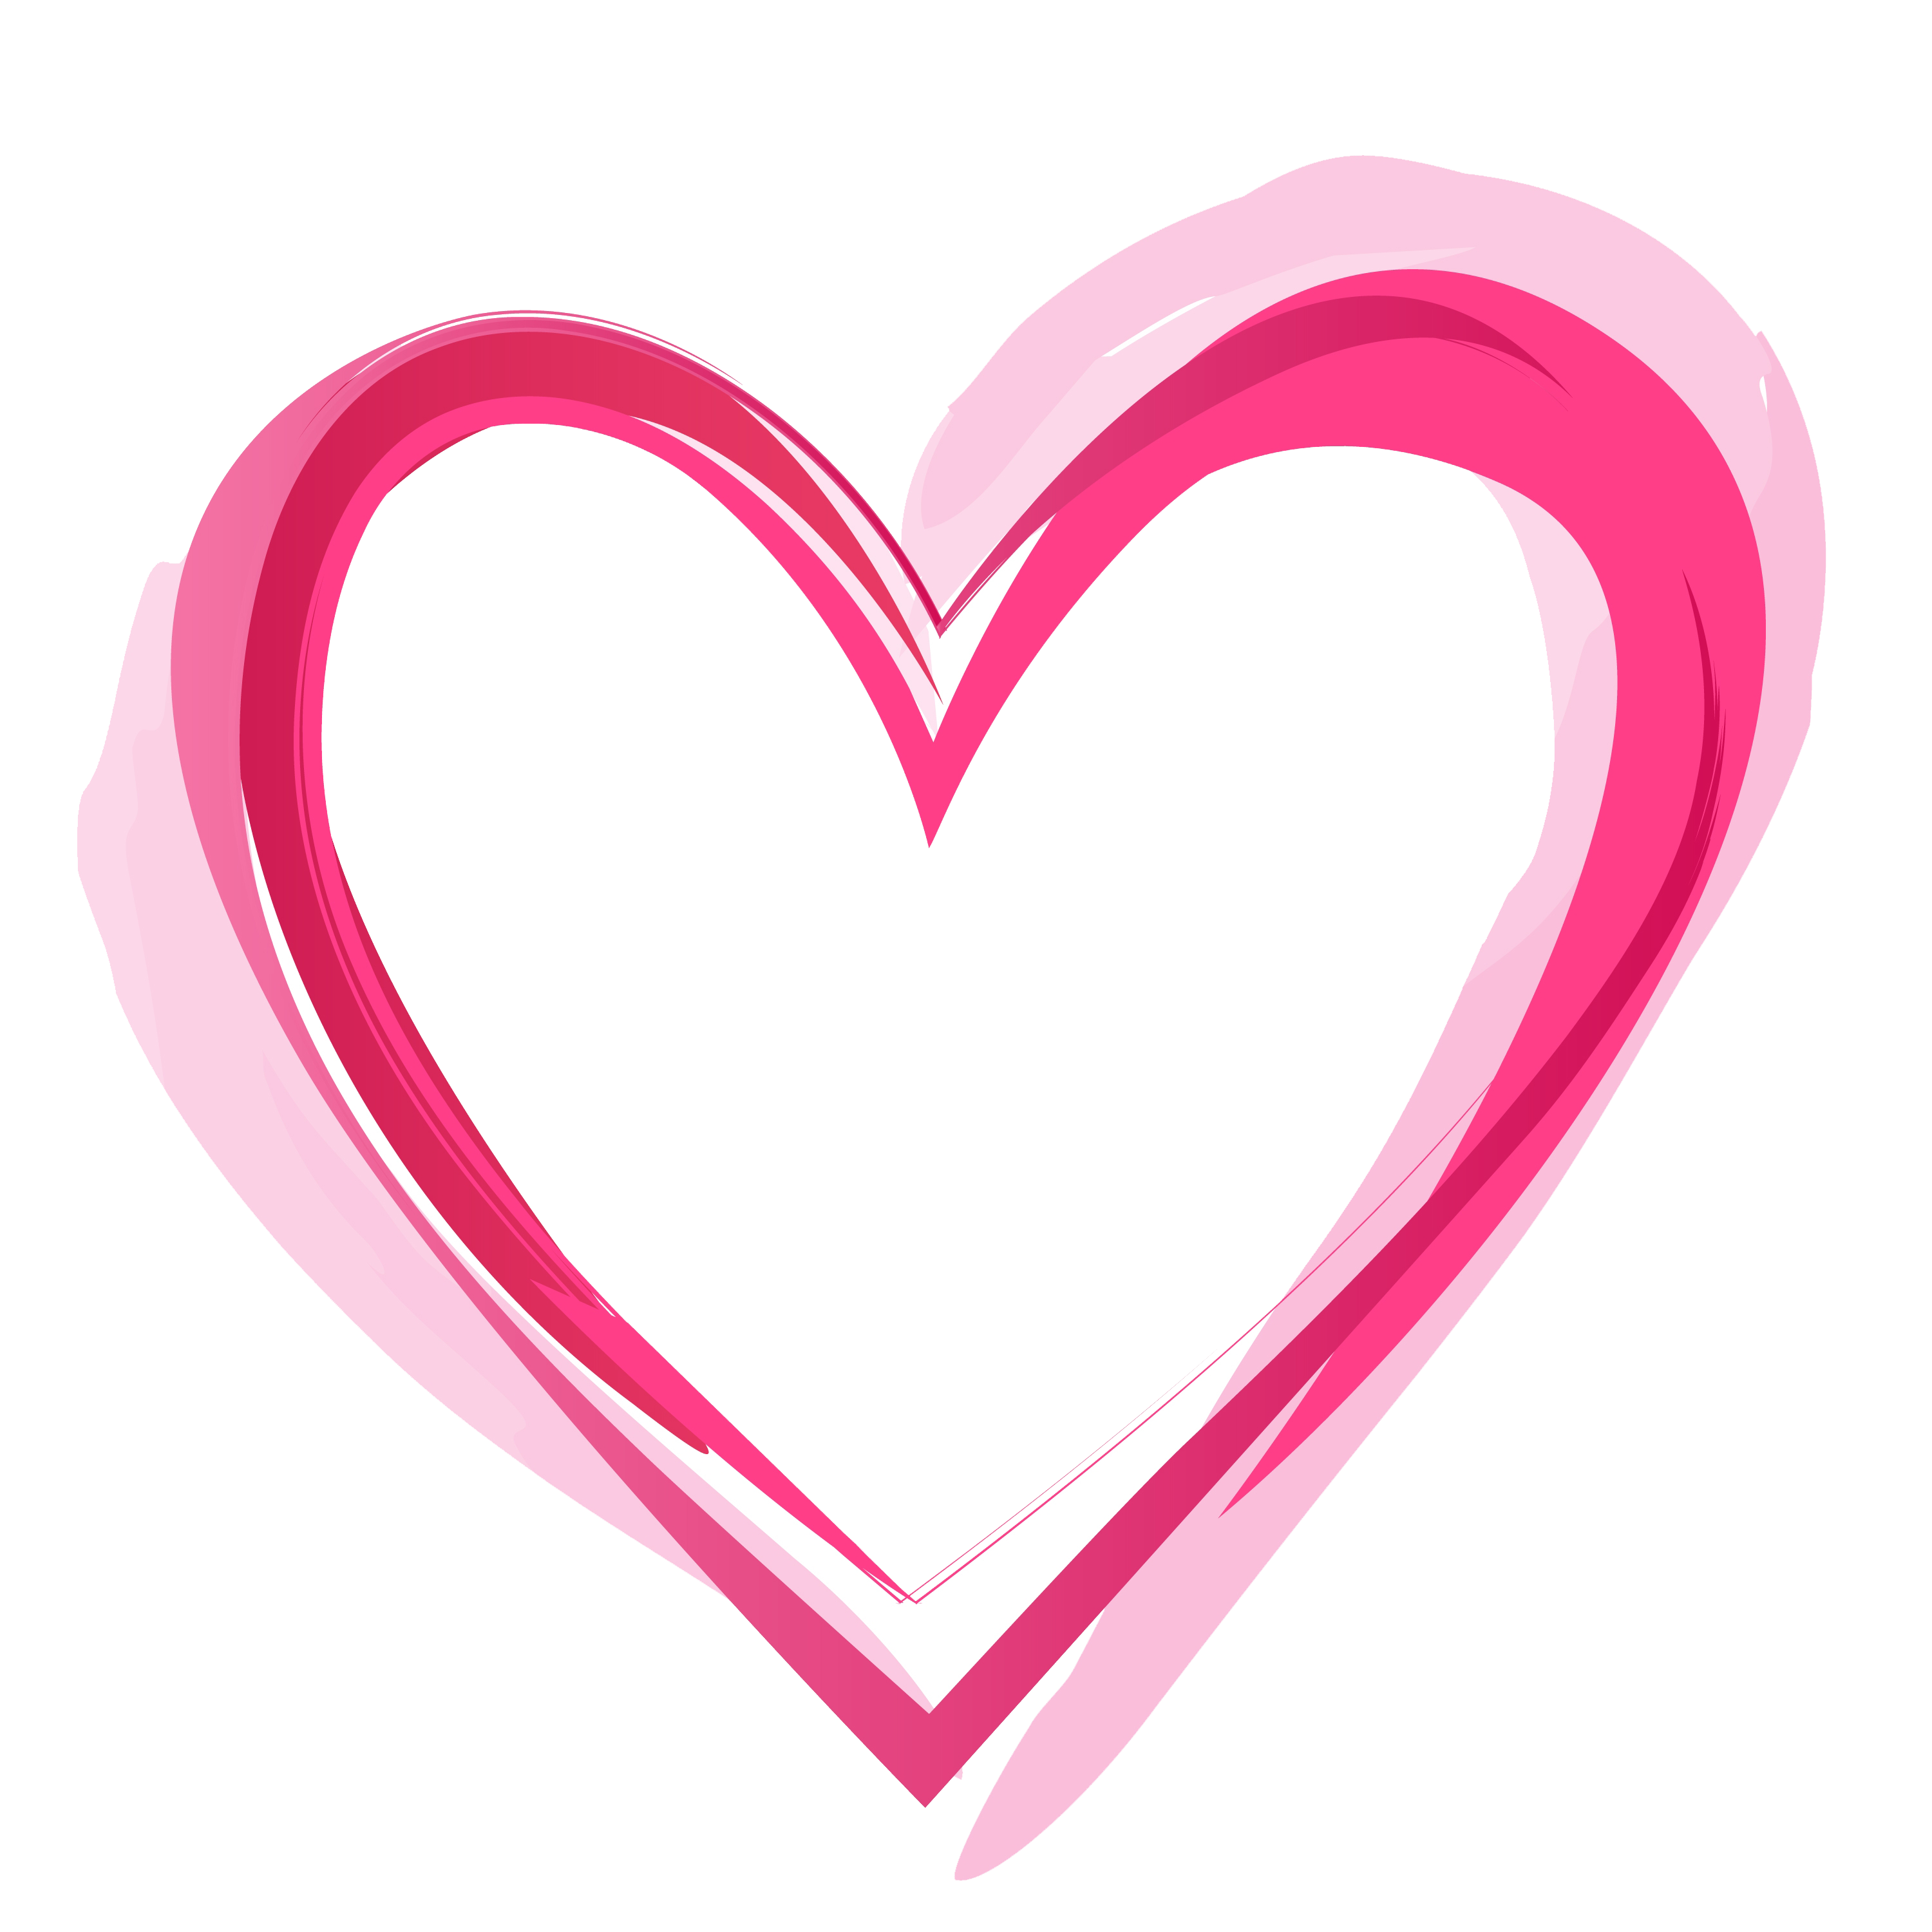 Download Pink Heart HQ PNG Image FreePNGImg